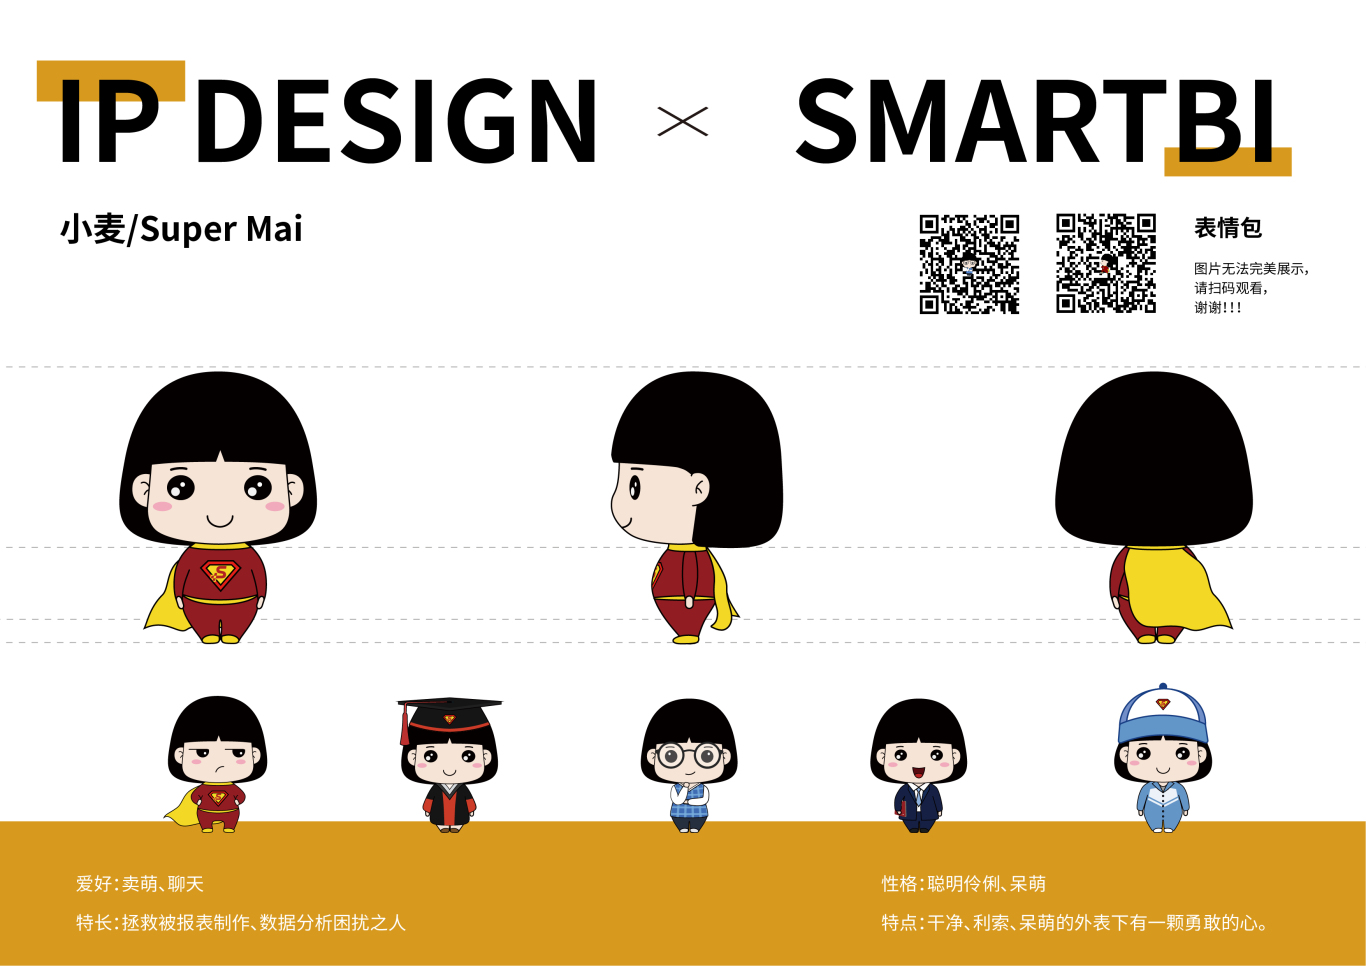 Smartbi 吉祥物图0